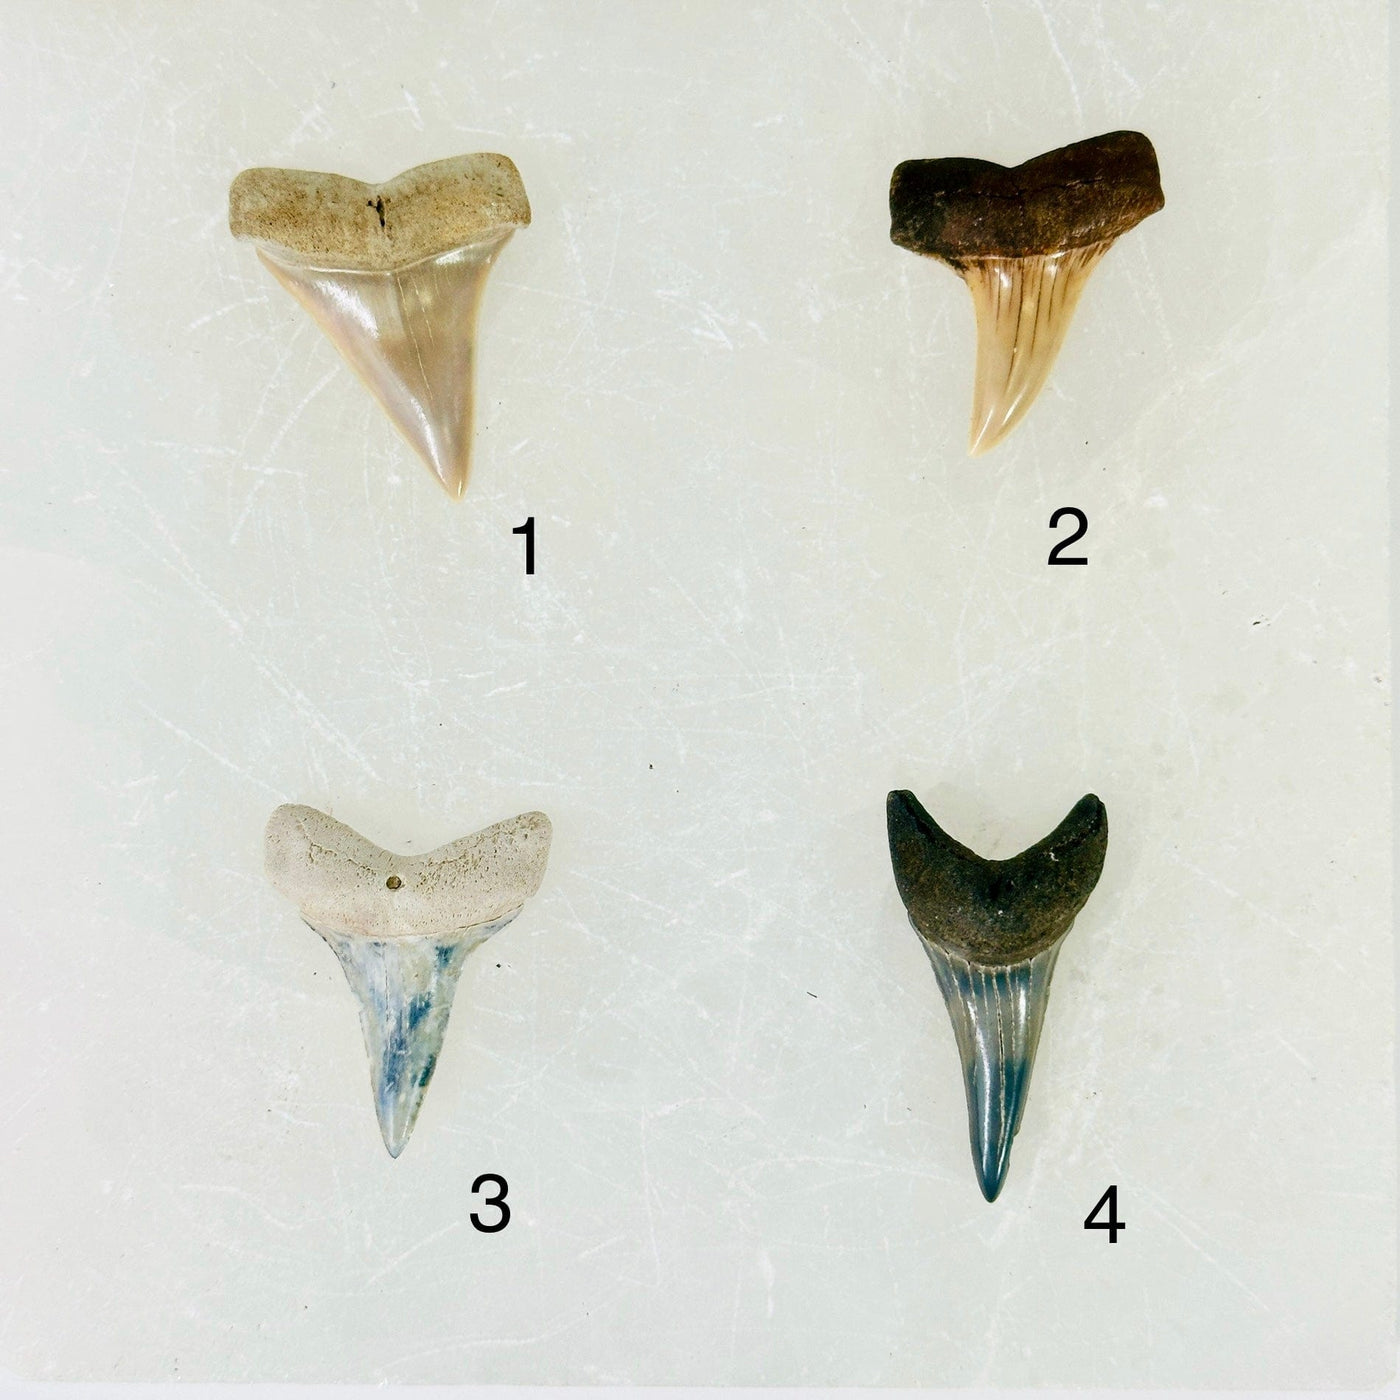 Mako Shark Teeth - Fossilized Polished Shark Teeth - You Choose variants 1 2 3 4 labeled